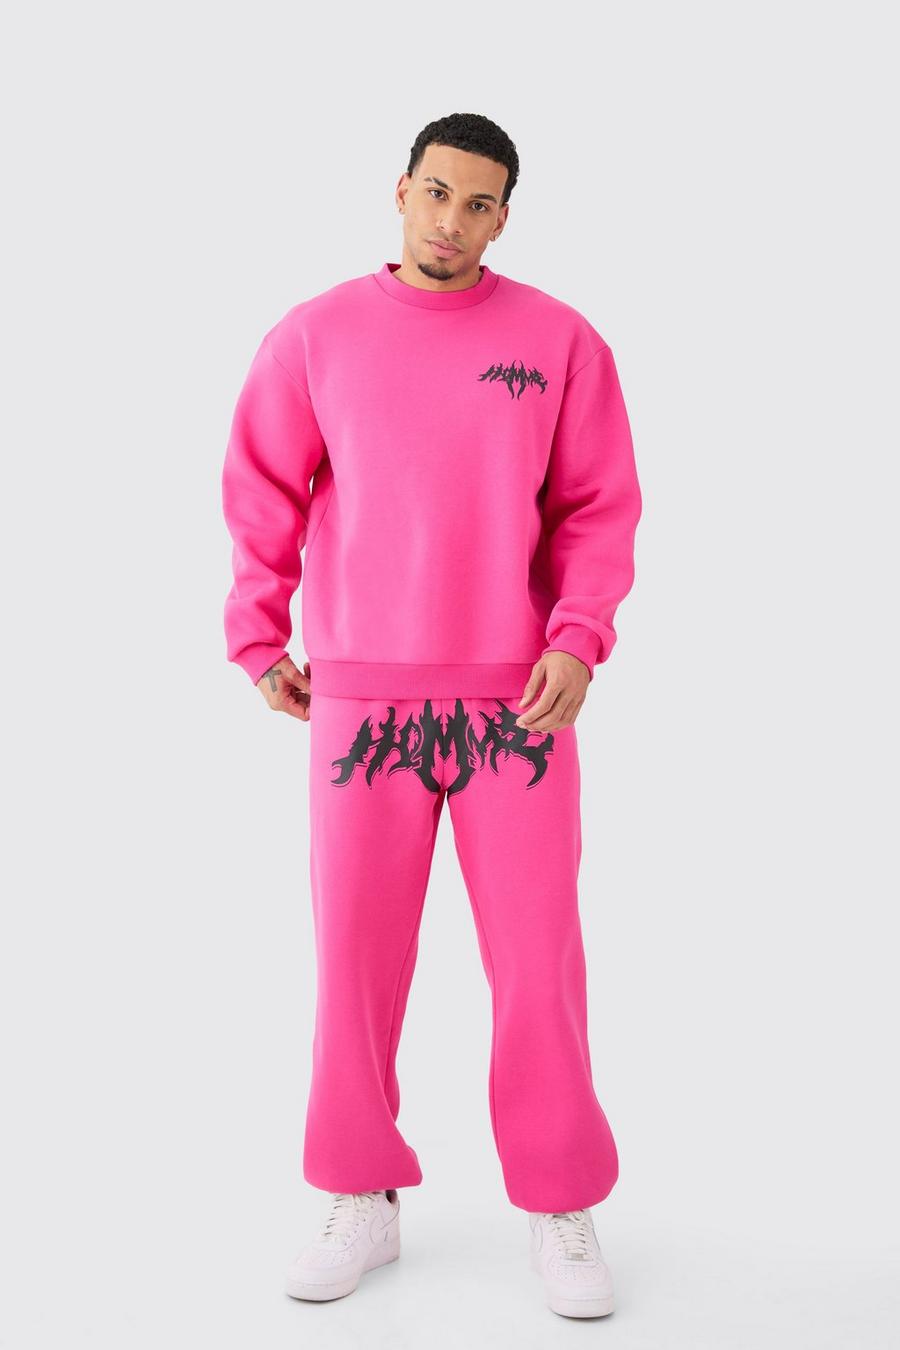 Chándal oversize con sudadera Homme y letras góticas, Pink image number 1